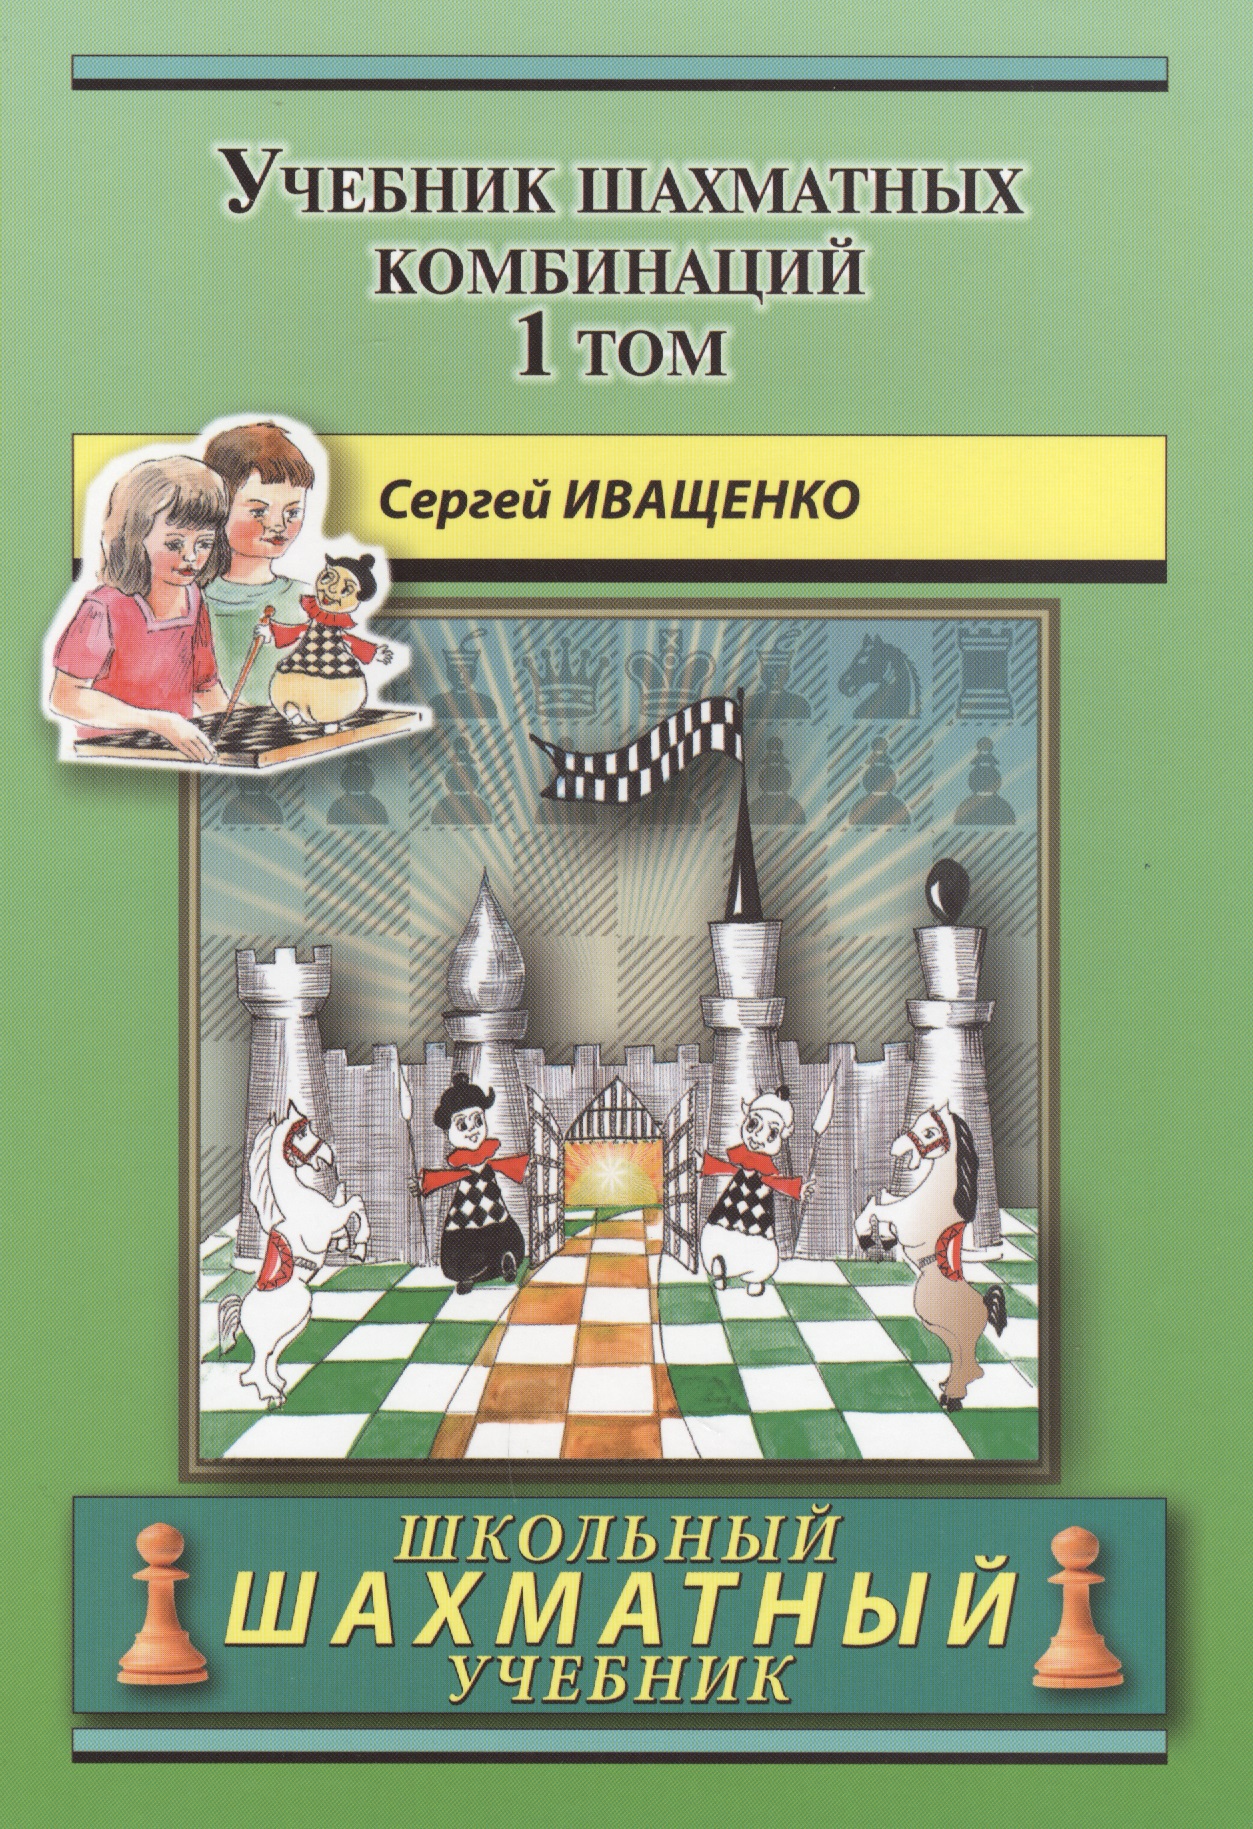 Учебник школа игры. Шахматы книги Иващенко. Иващенко 1а шахматные комбинации.